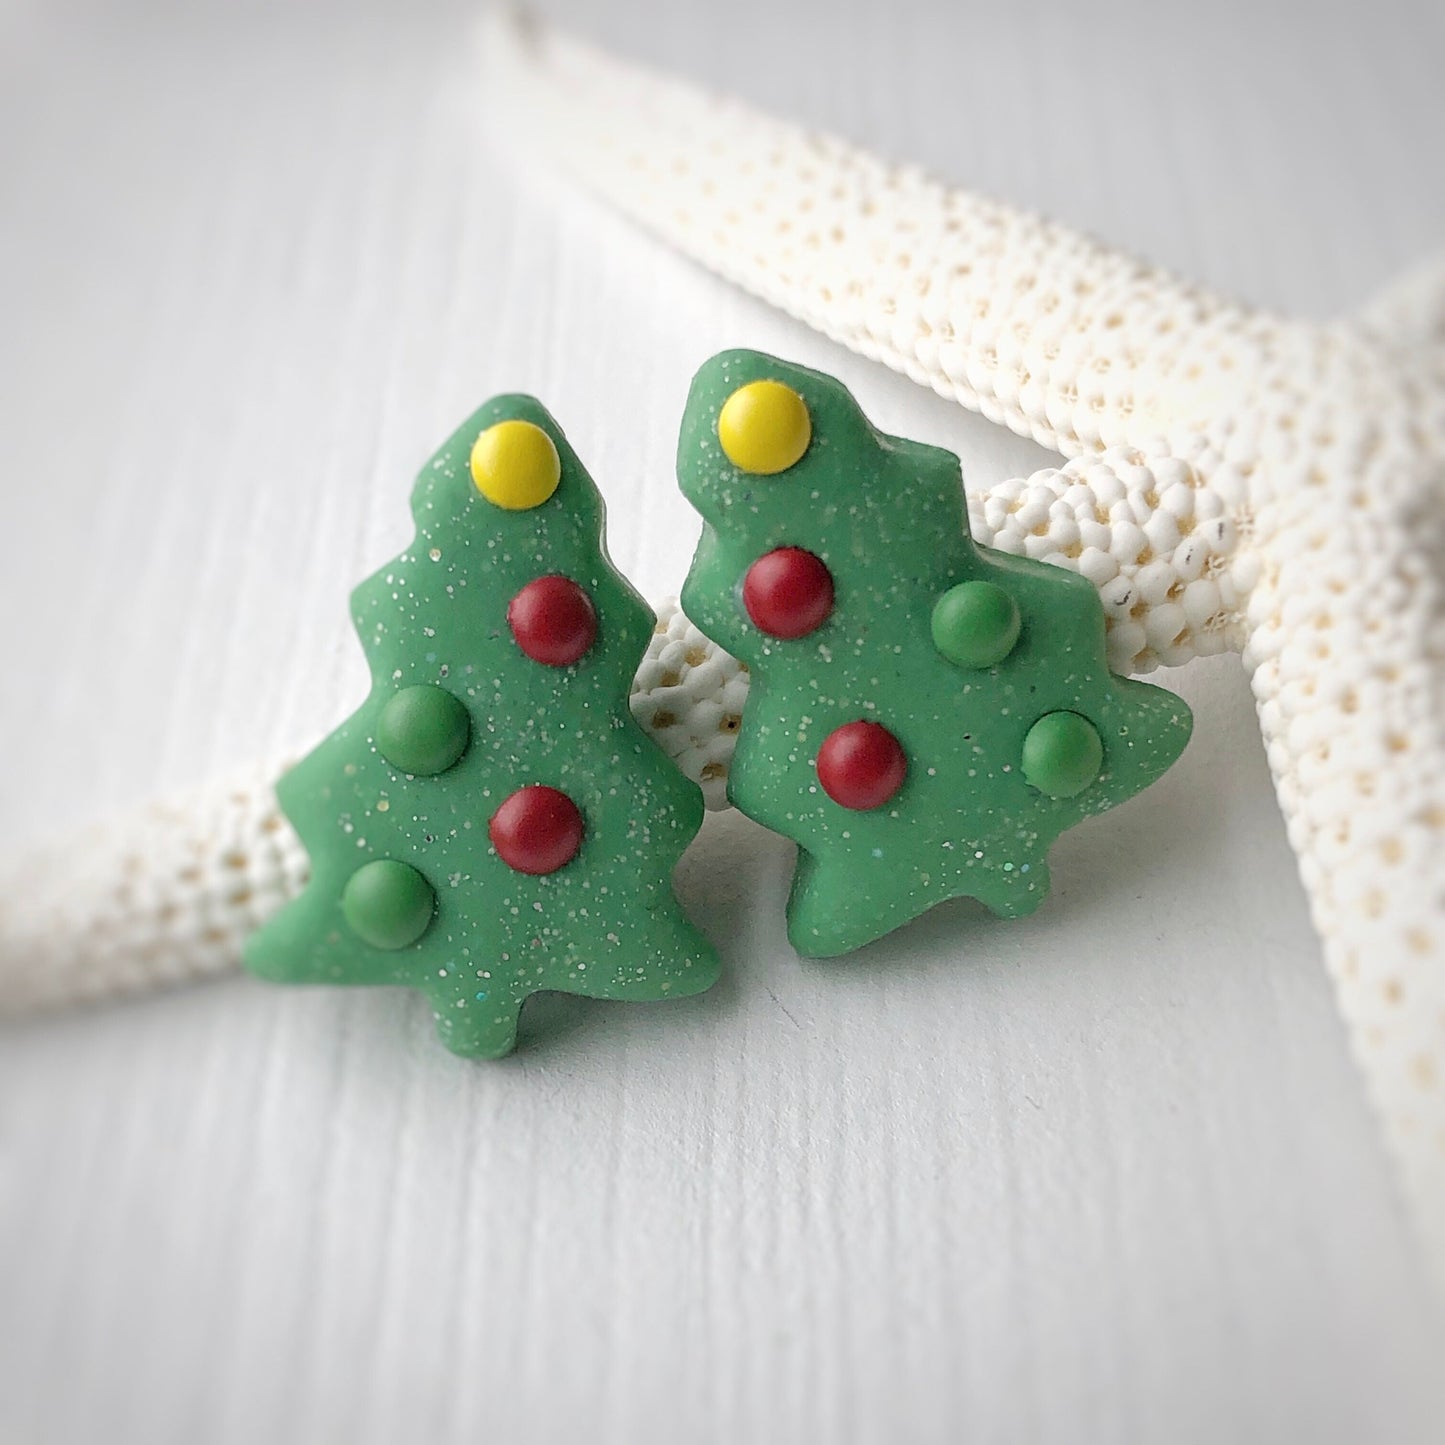 Decorated Christmas Tree Stud Earrings, IWC Earrings